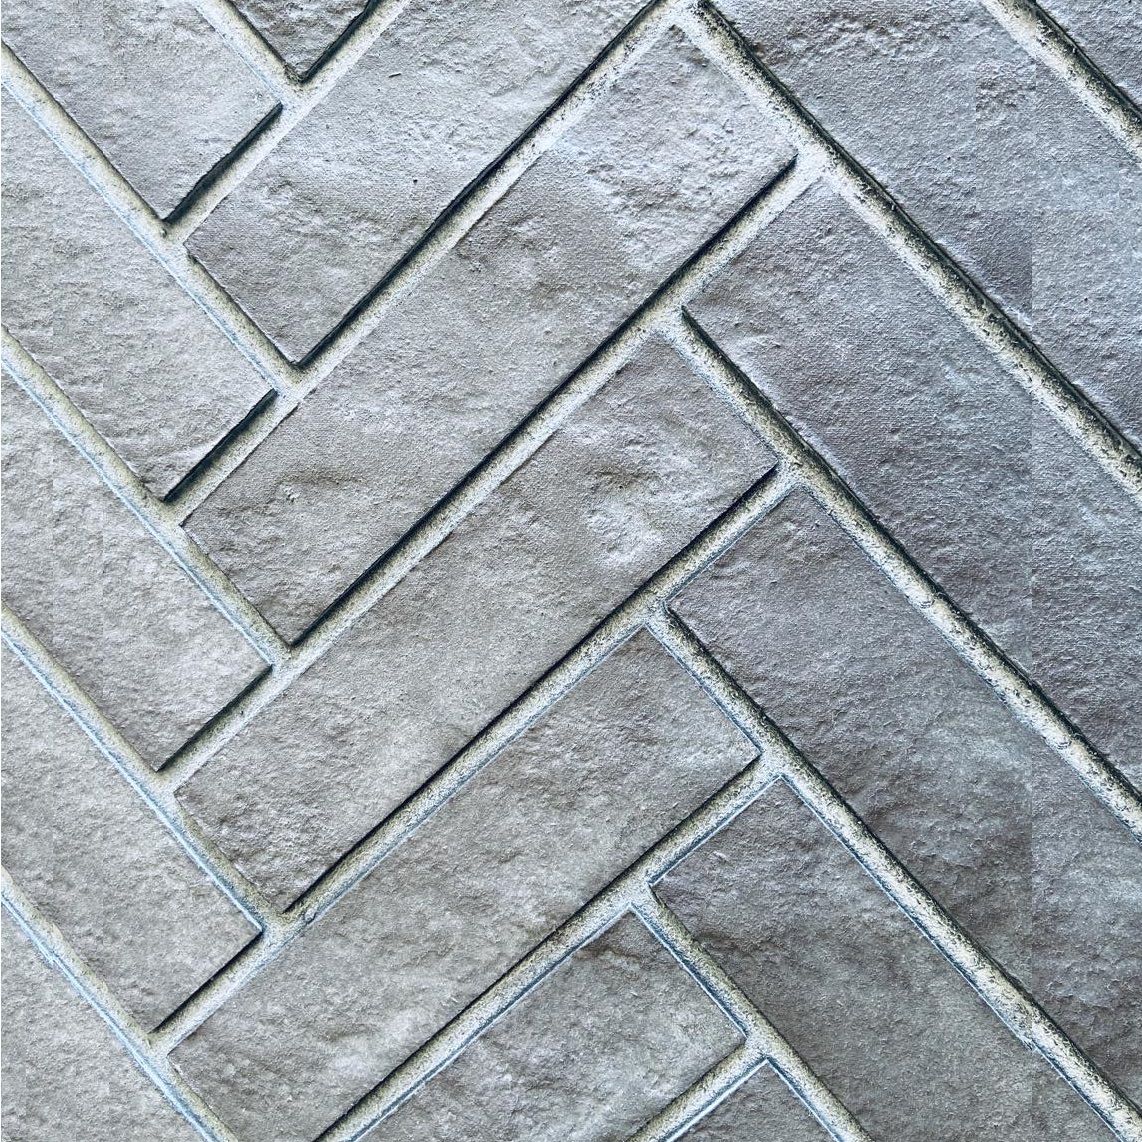 NAPDBPEX42WH | Napoleon EX42 Decorative Brick Panels | Westminster Herringbone Brick Pattern